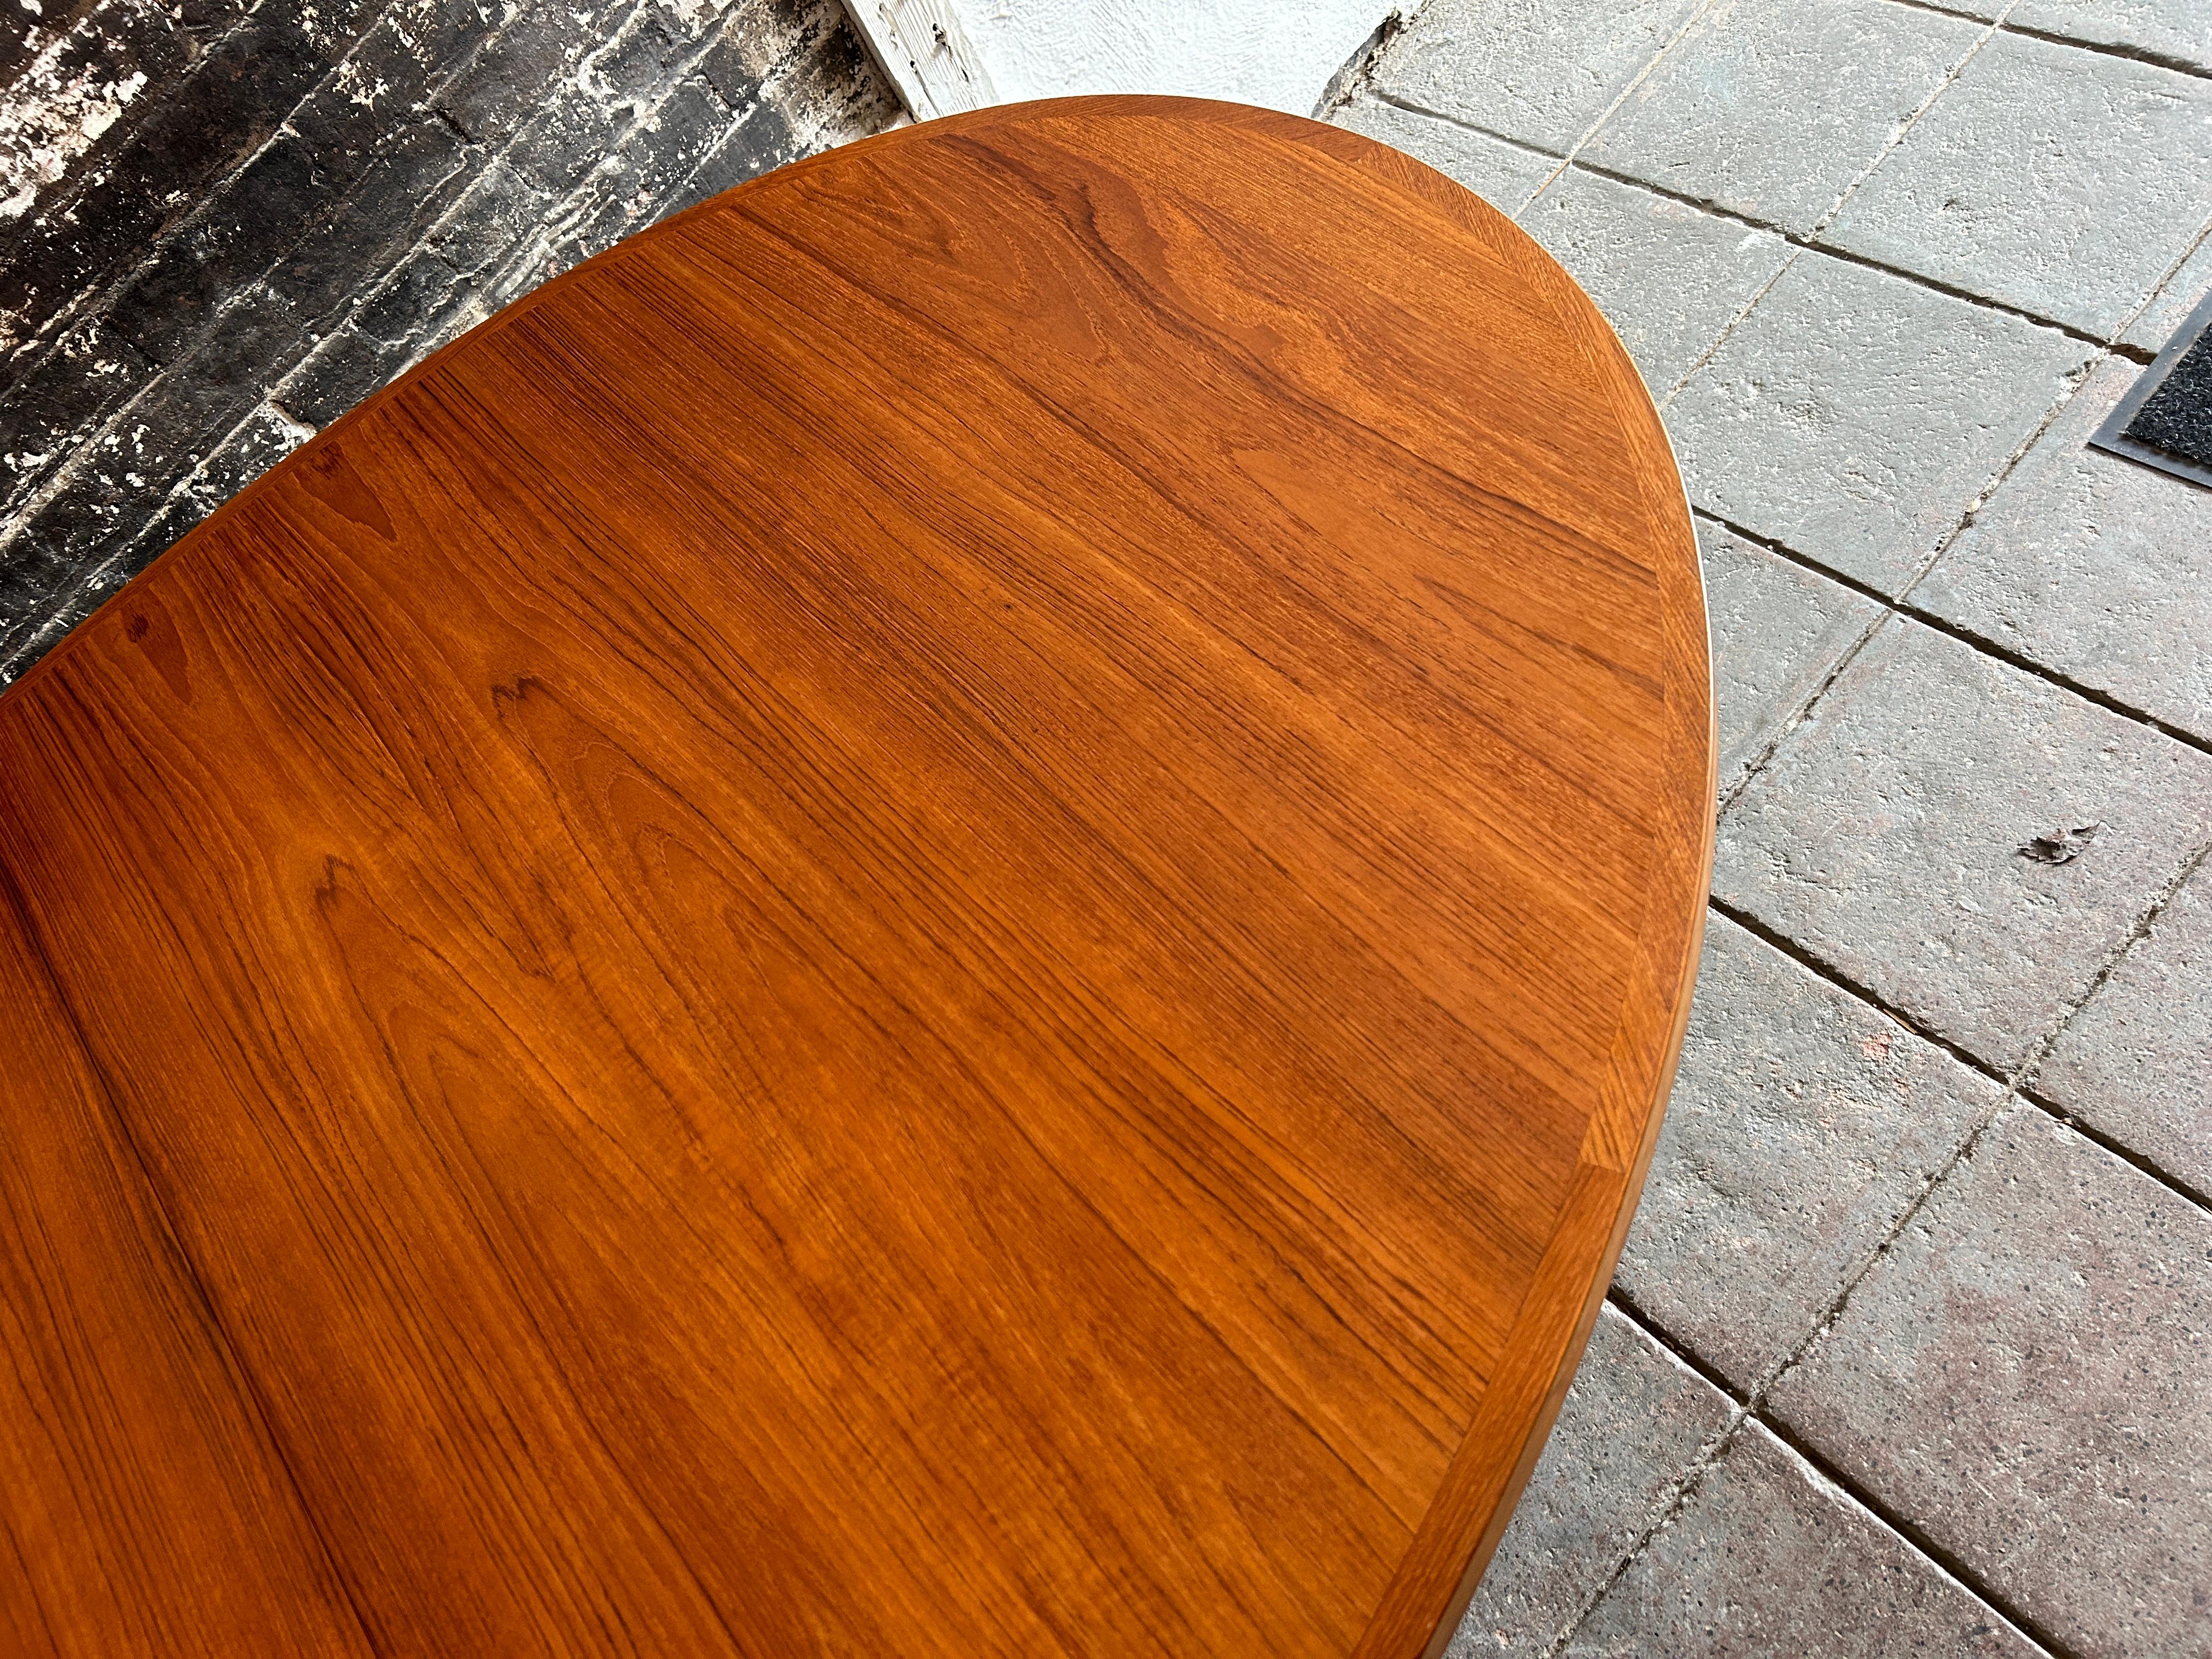 Woodwork Stunning Mid Century Oval Teak Danish Modern Extension Dining Table 2 Leaves